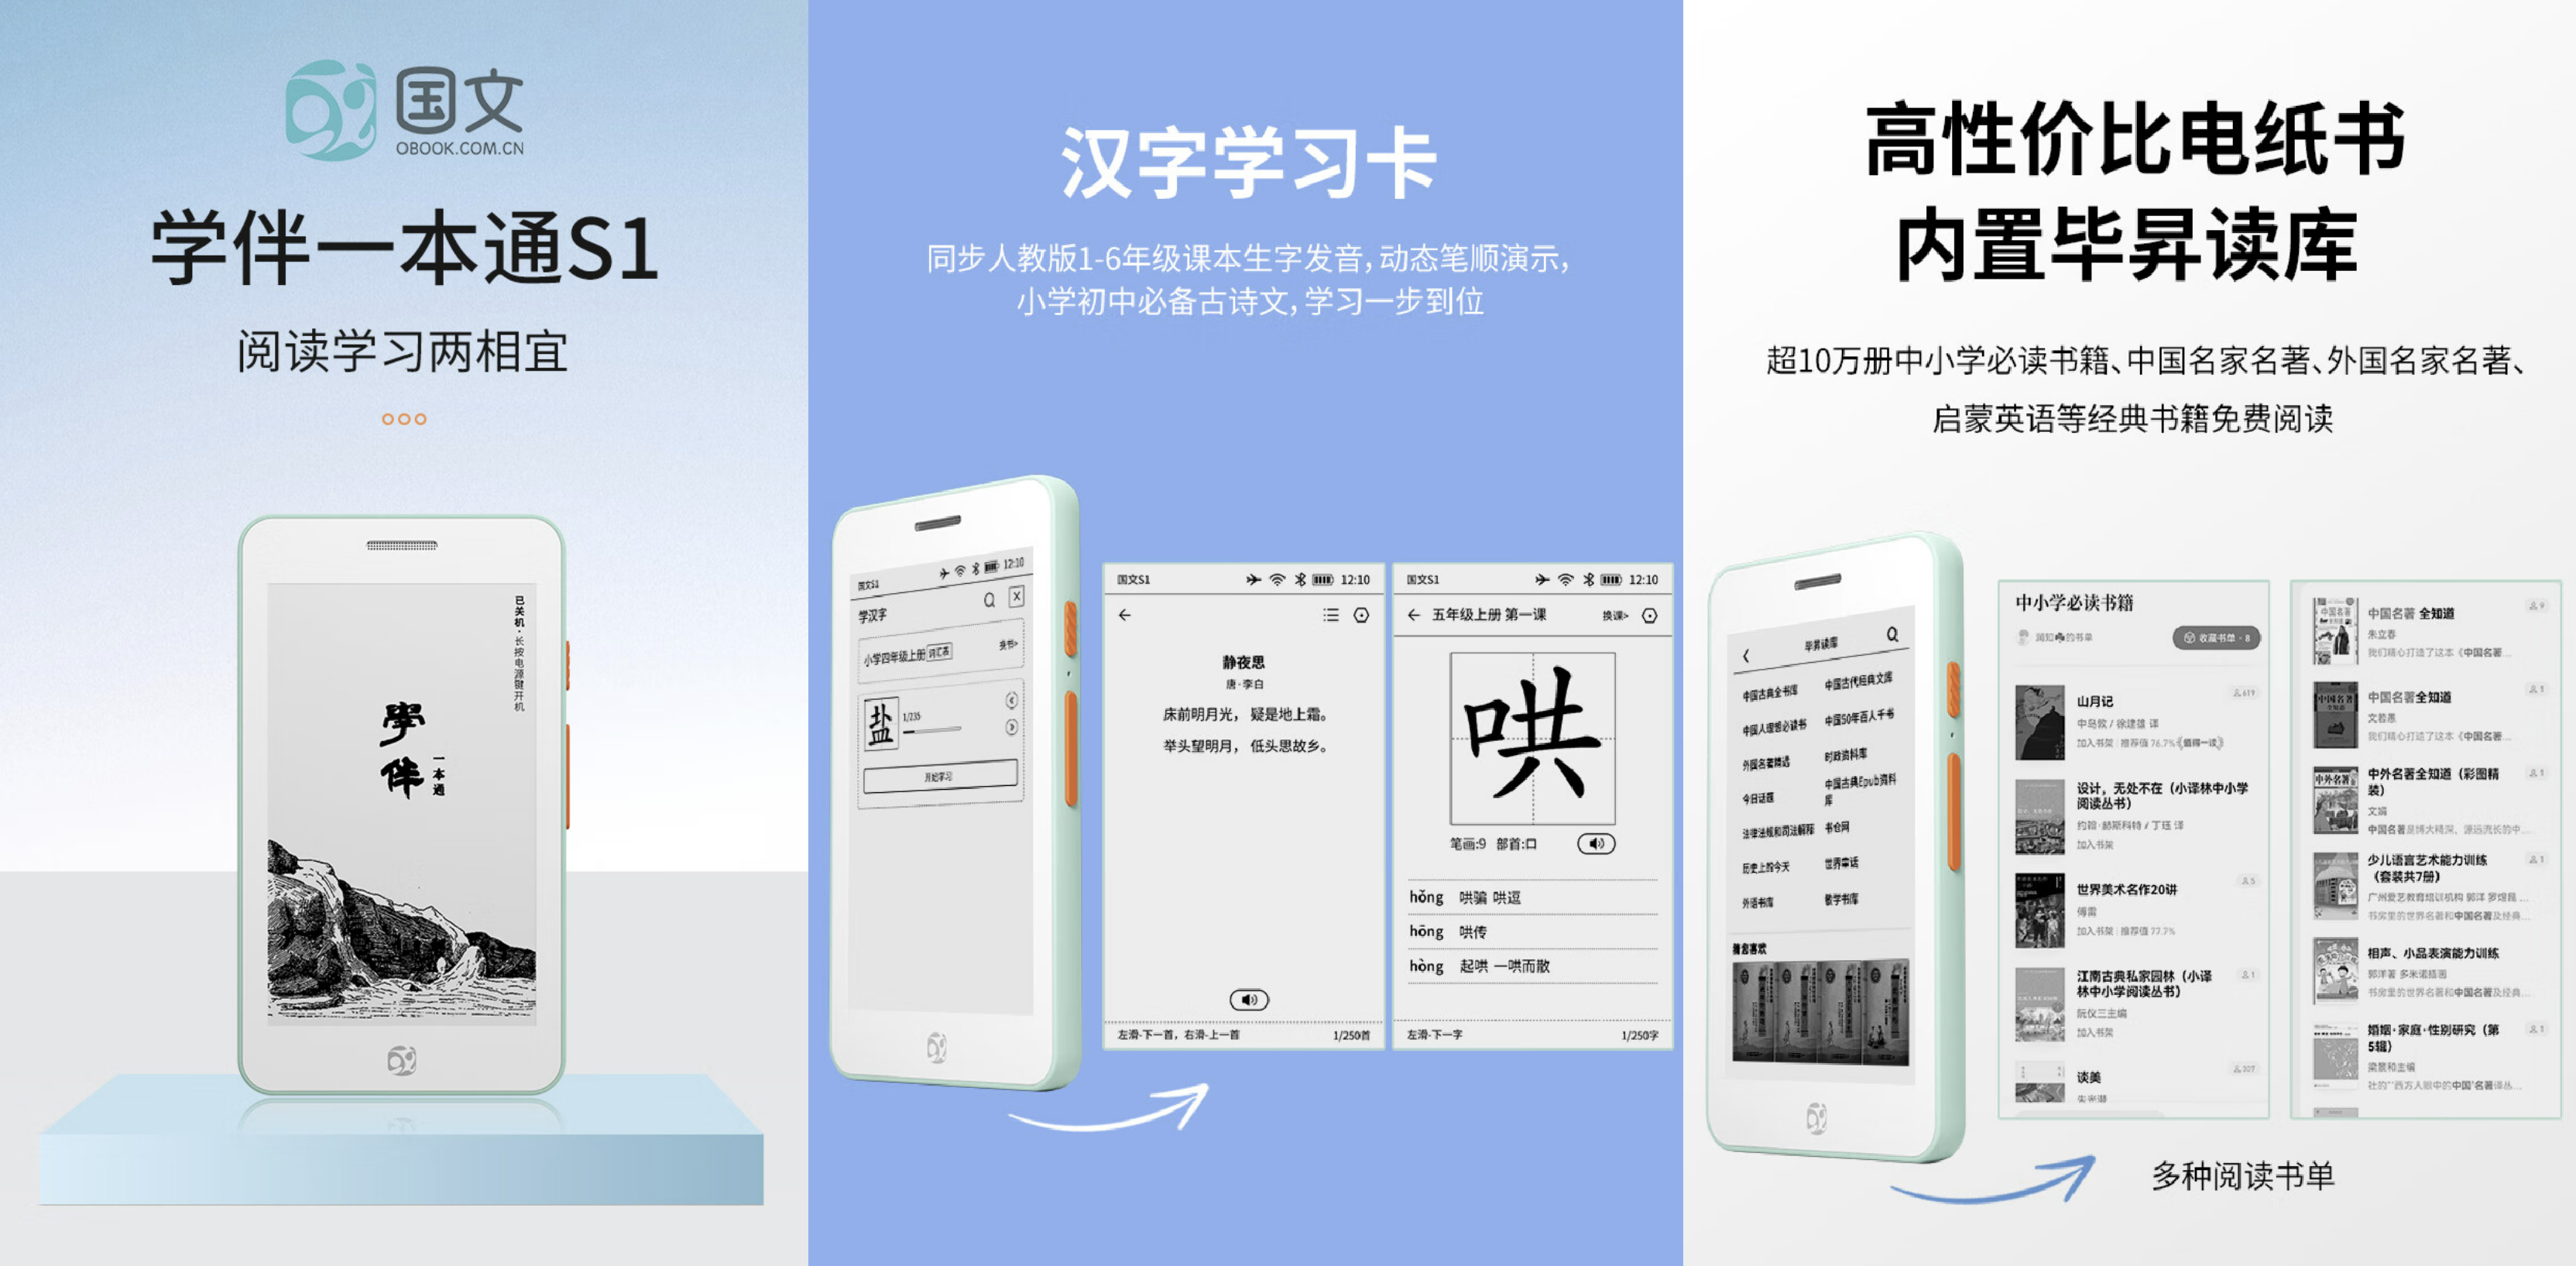 E-Ink產品：國文OBOOK學伴一本通S1/S1 Pro──4.26吋的手機型閱讀器